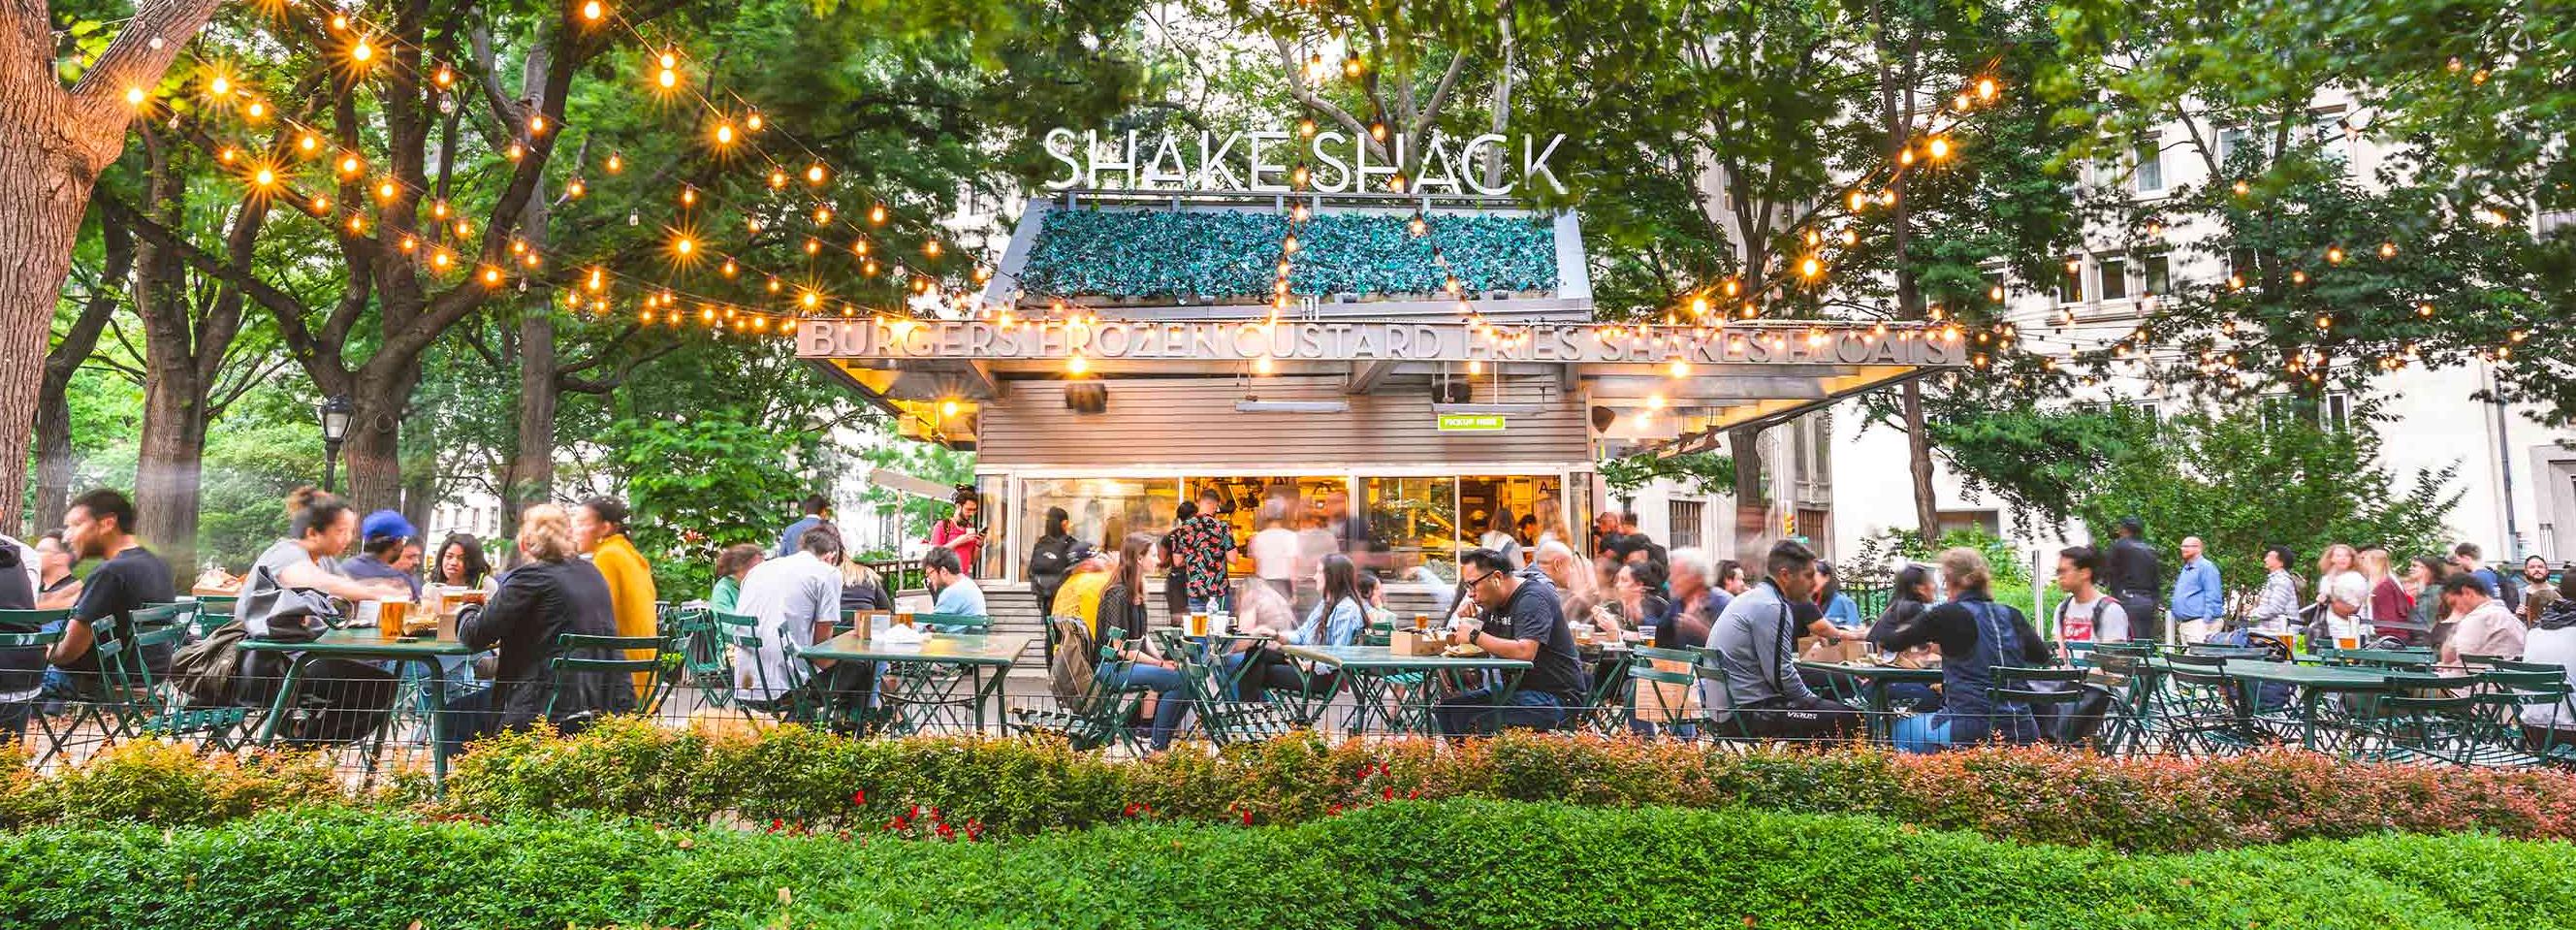 Shake Shack Dining Experience